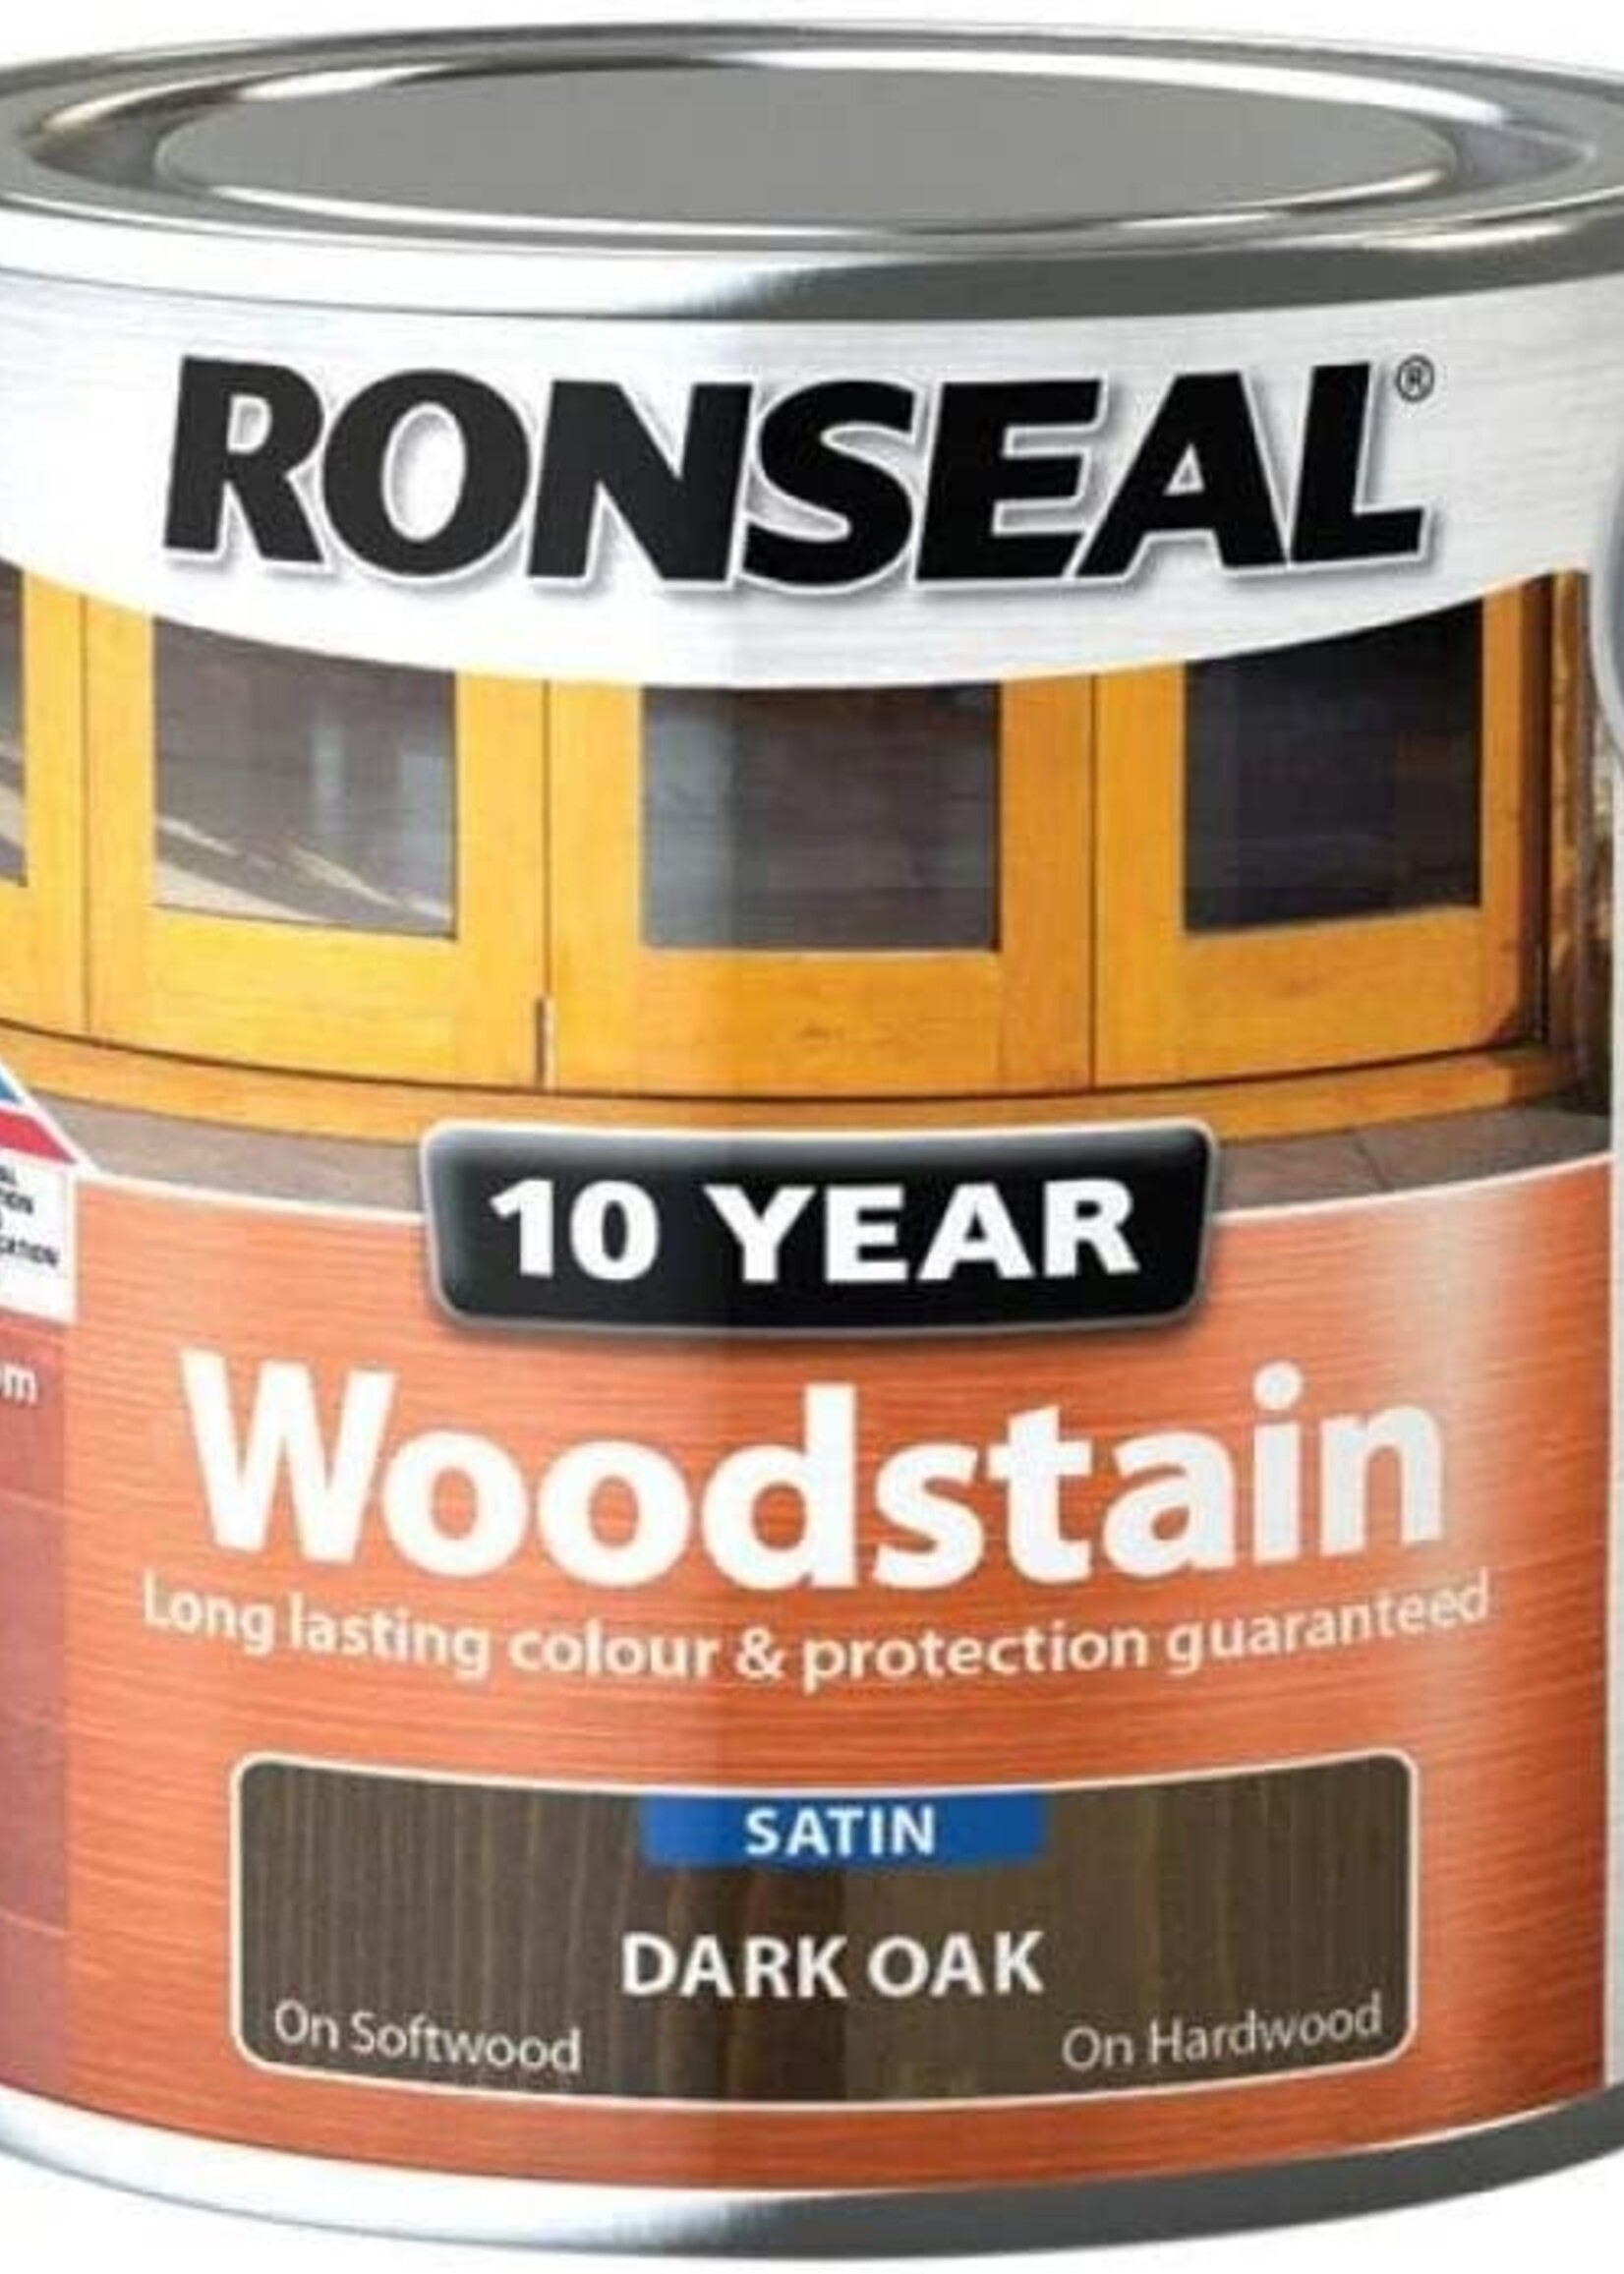 Ronseal Ronseal 10 Year Woodstain Satin